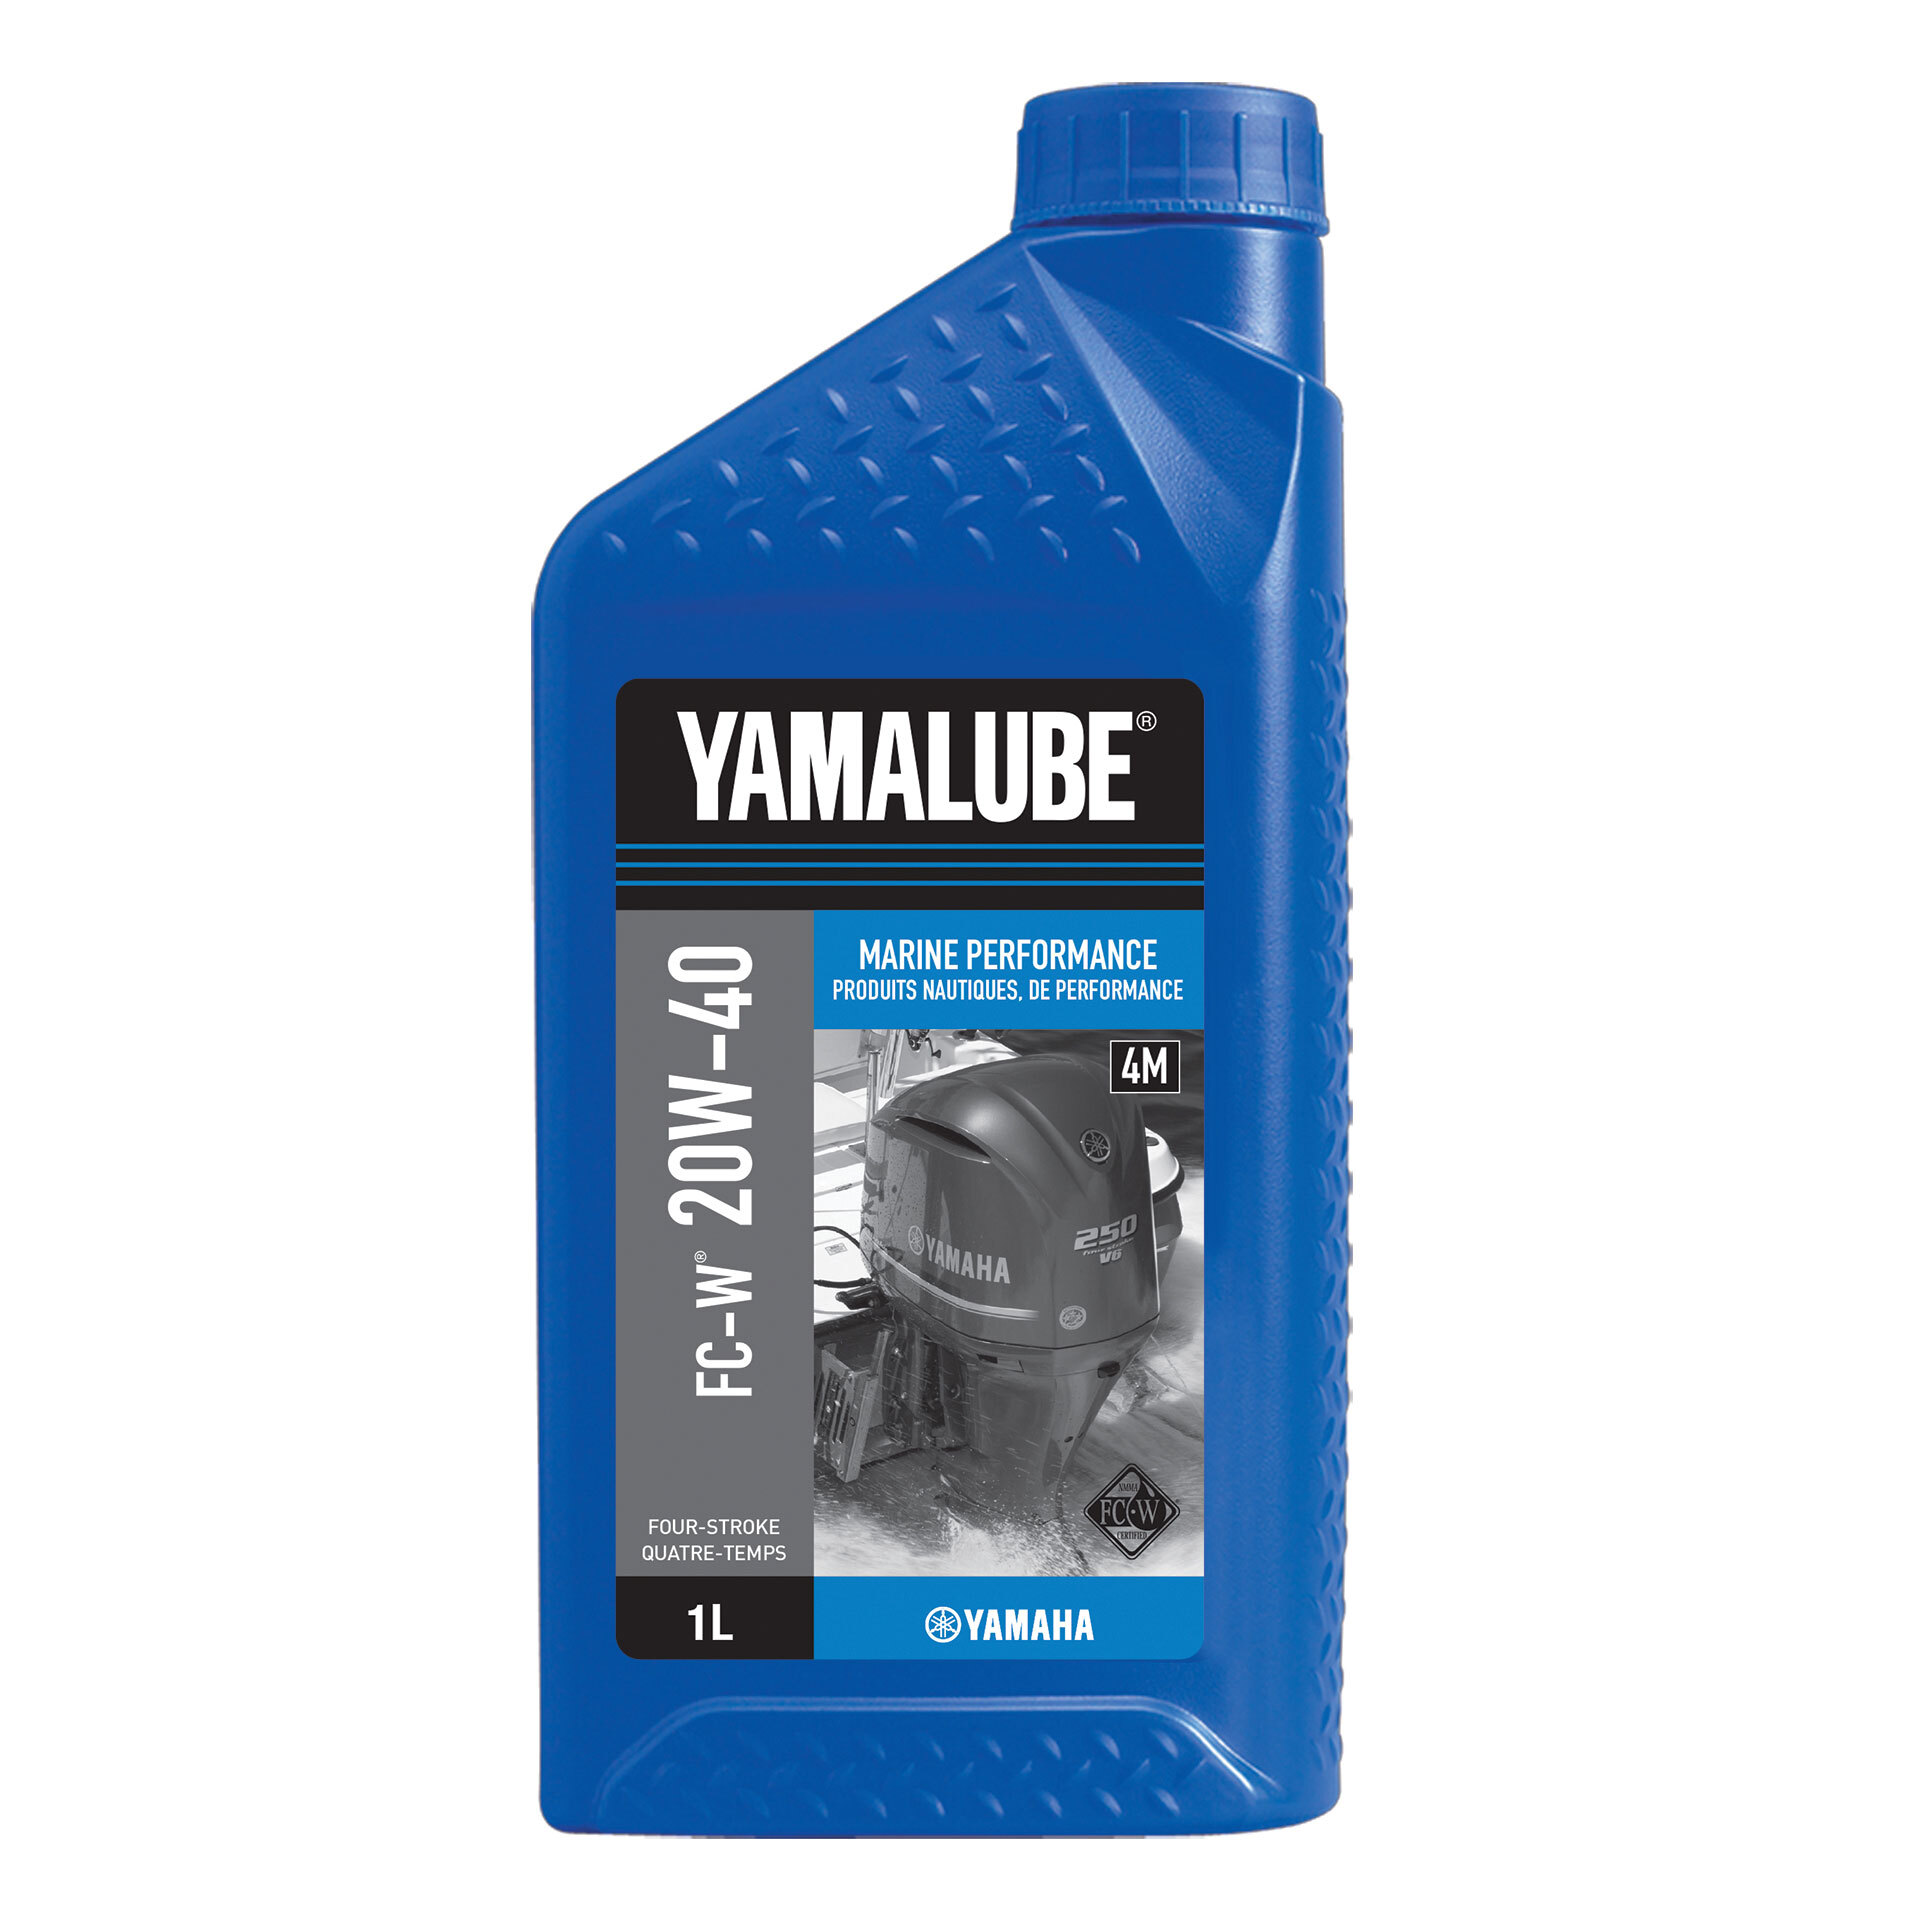 Yamalube® 20W 40 4M Marine Performance Engine Oil